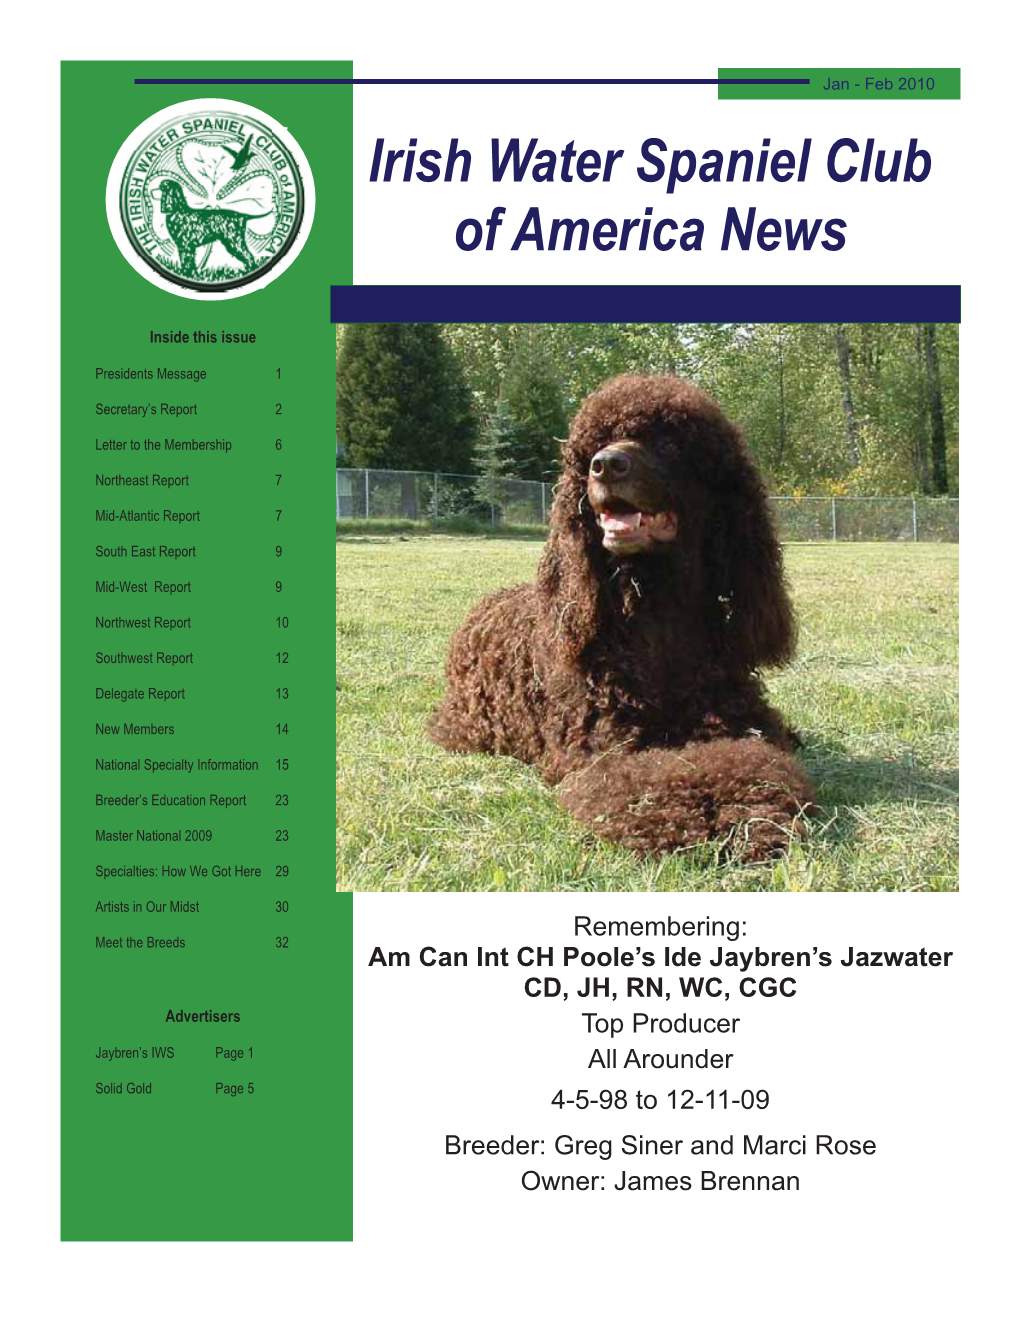 Irish Water Spaniel Club of America News